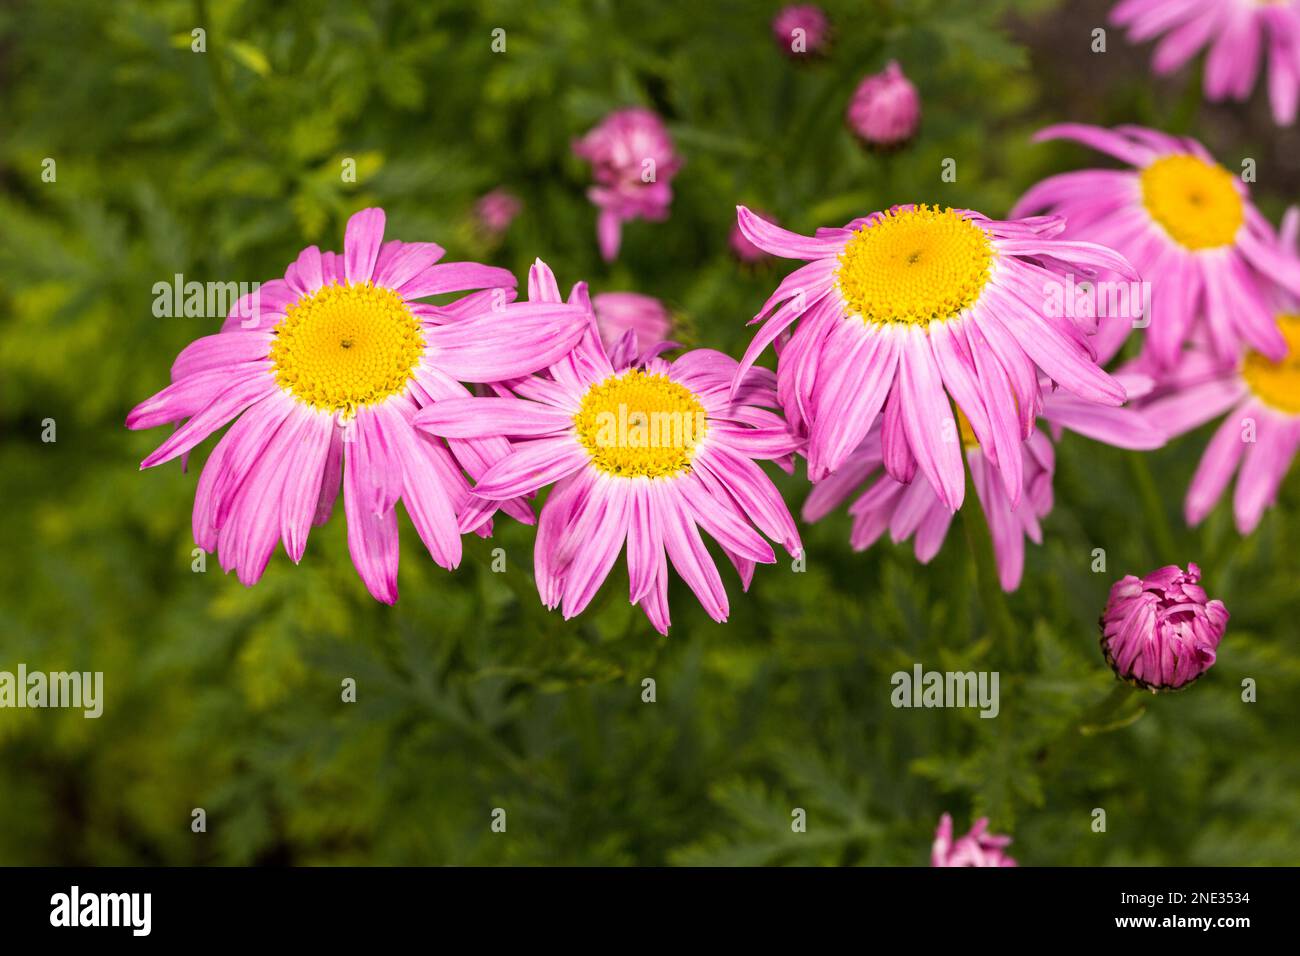 Wunderschöne Blumen in den Farben Gelb und Pink in einem Bauerngarten - bellissimi fiori di sfumature di giallo e rosa in un giardino cottage Foto Stock